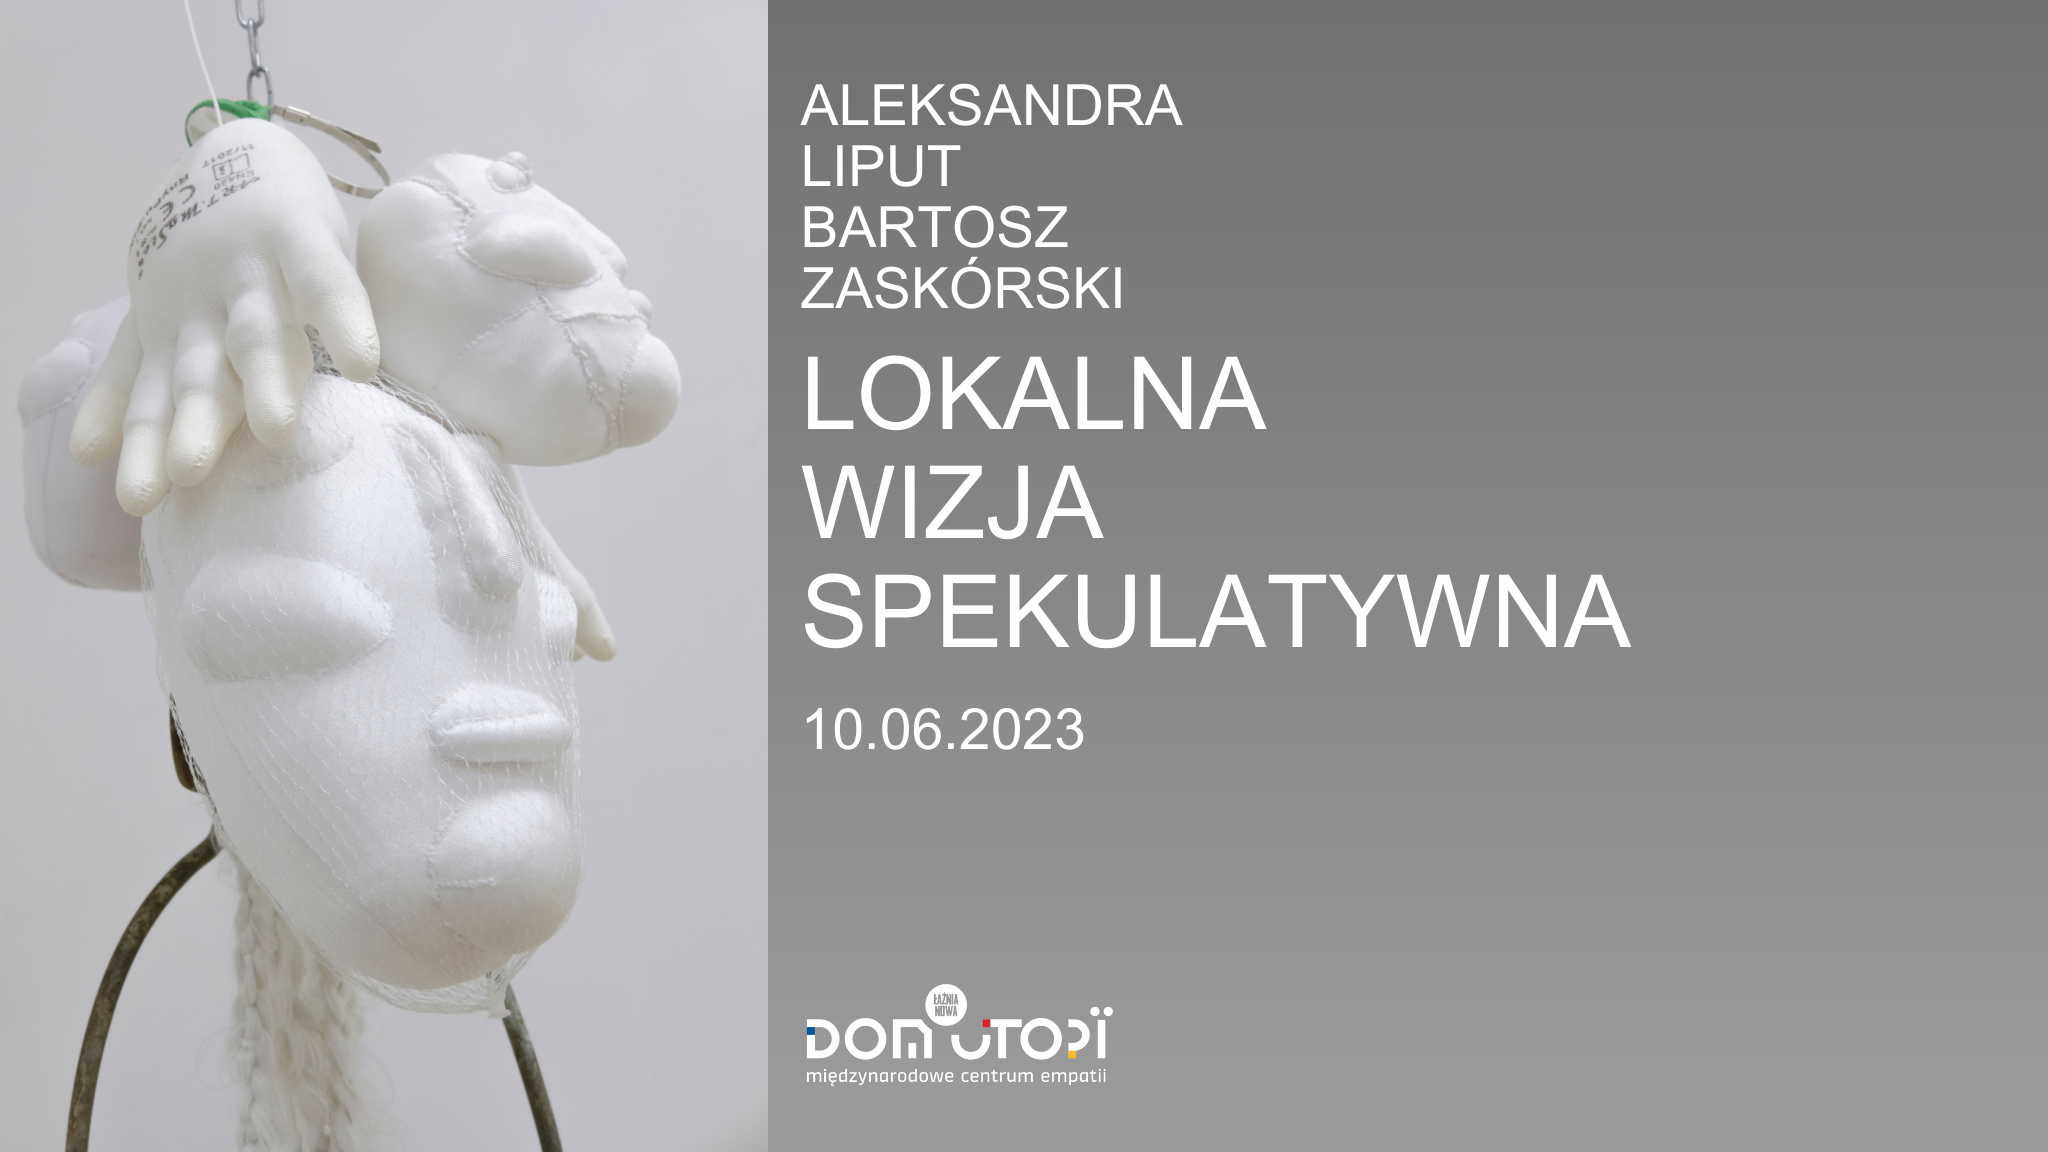 Aleksandra Liput, Bartosz Zaskórski “Lokalna wizja spekulatywna” (10.06.2023)